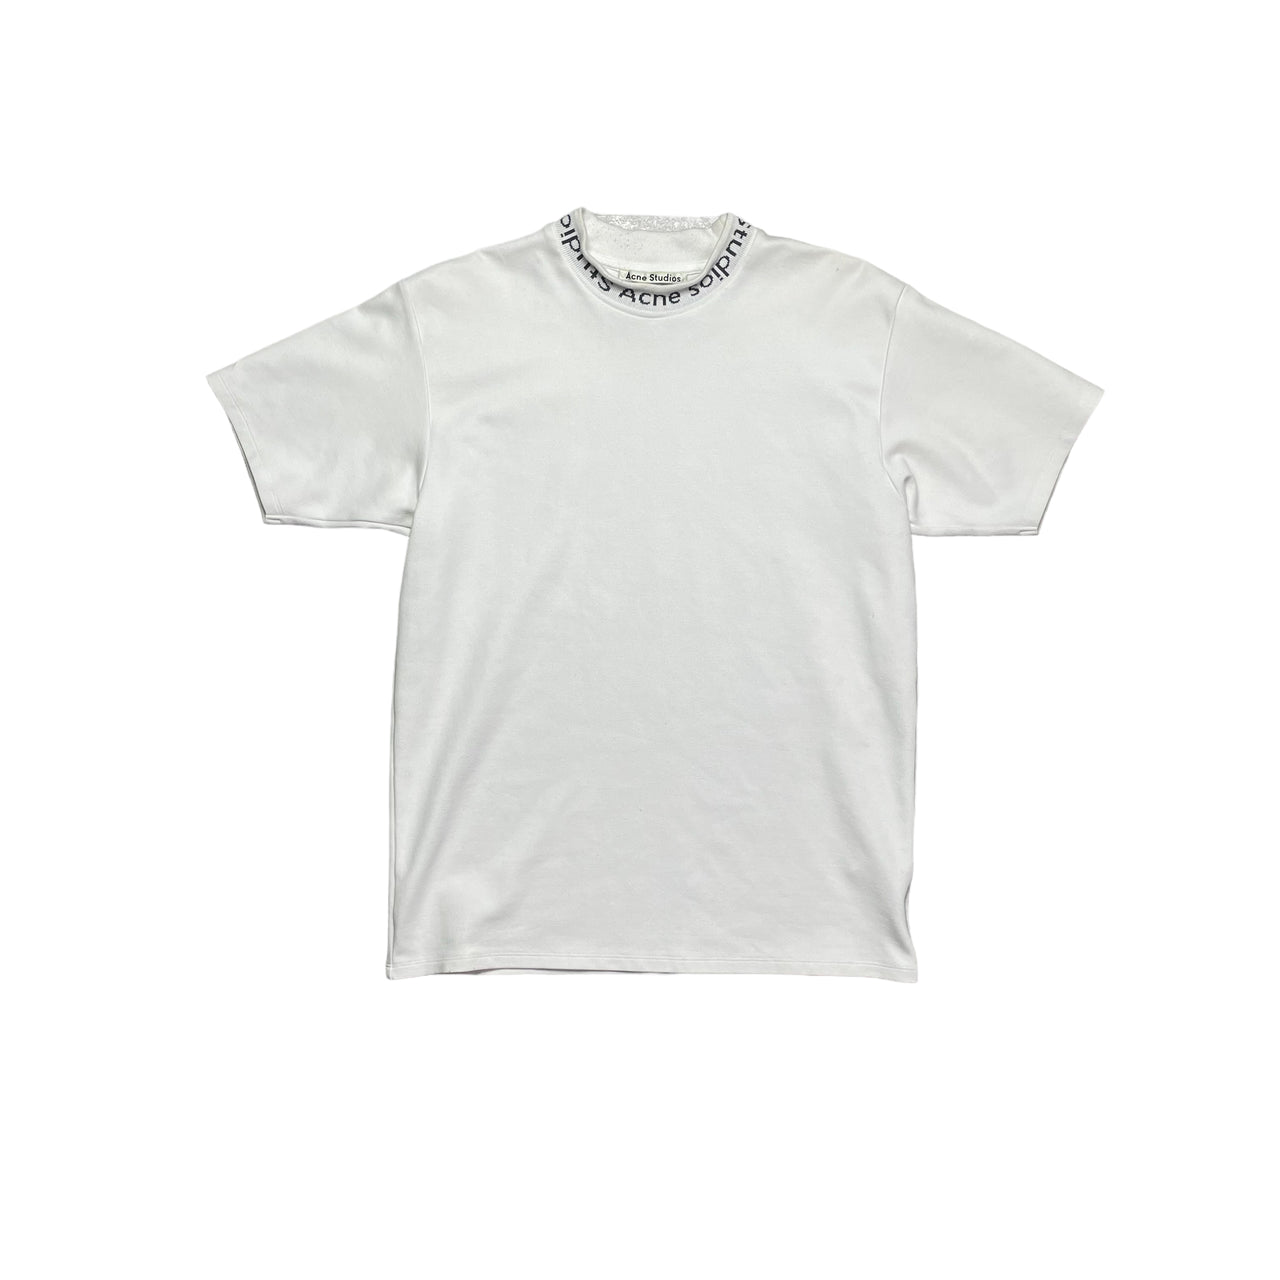 Acne Studios T-shirt White Small